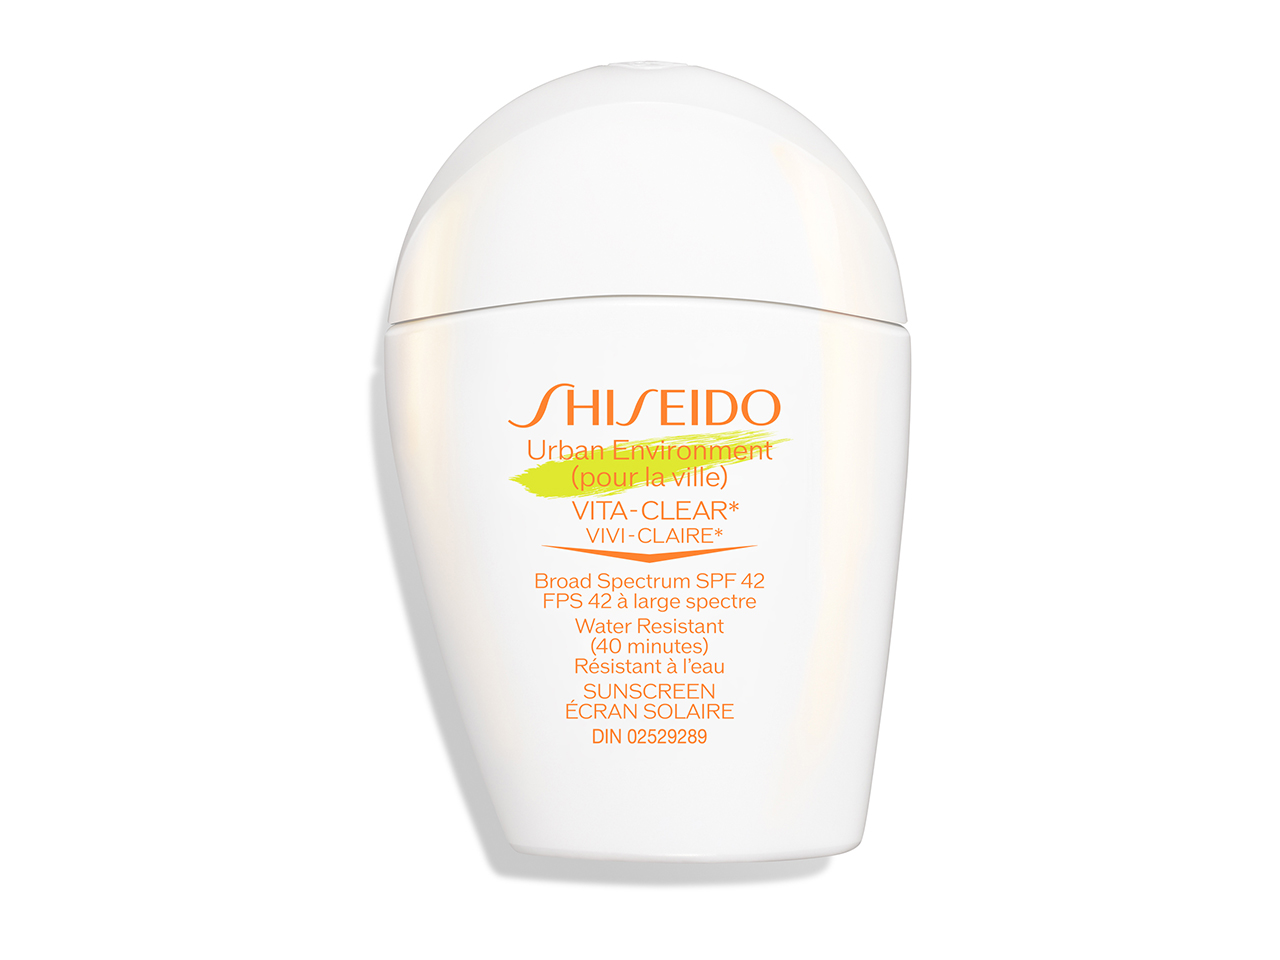 A white bottle with orange writing of Shiseido Urban Environment Vita-Clear Sunscreen SPF 42 sunscreen.